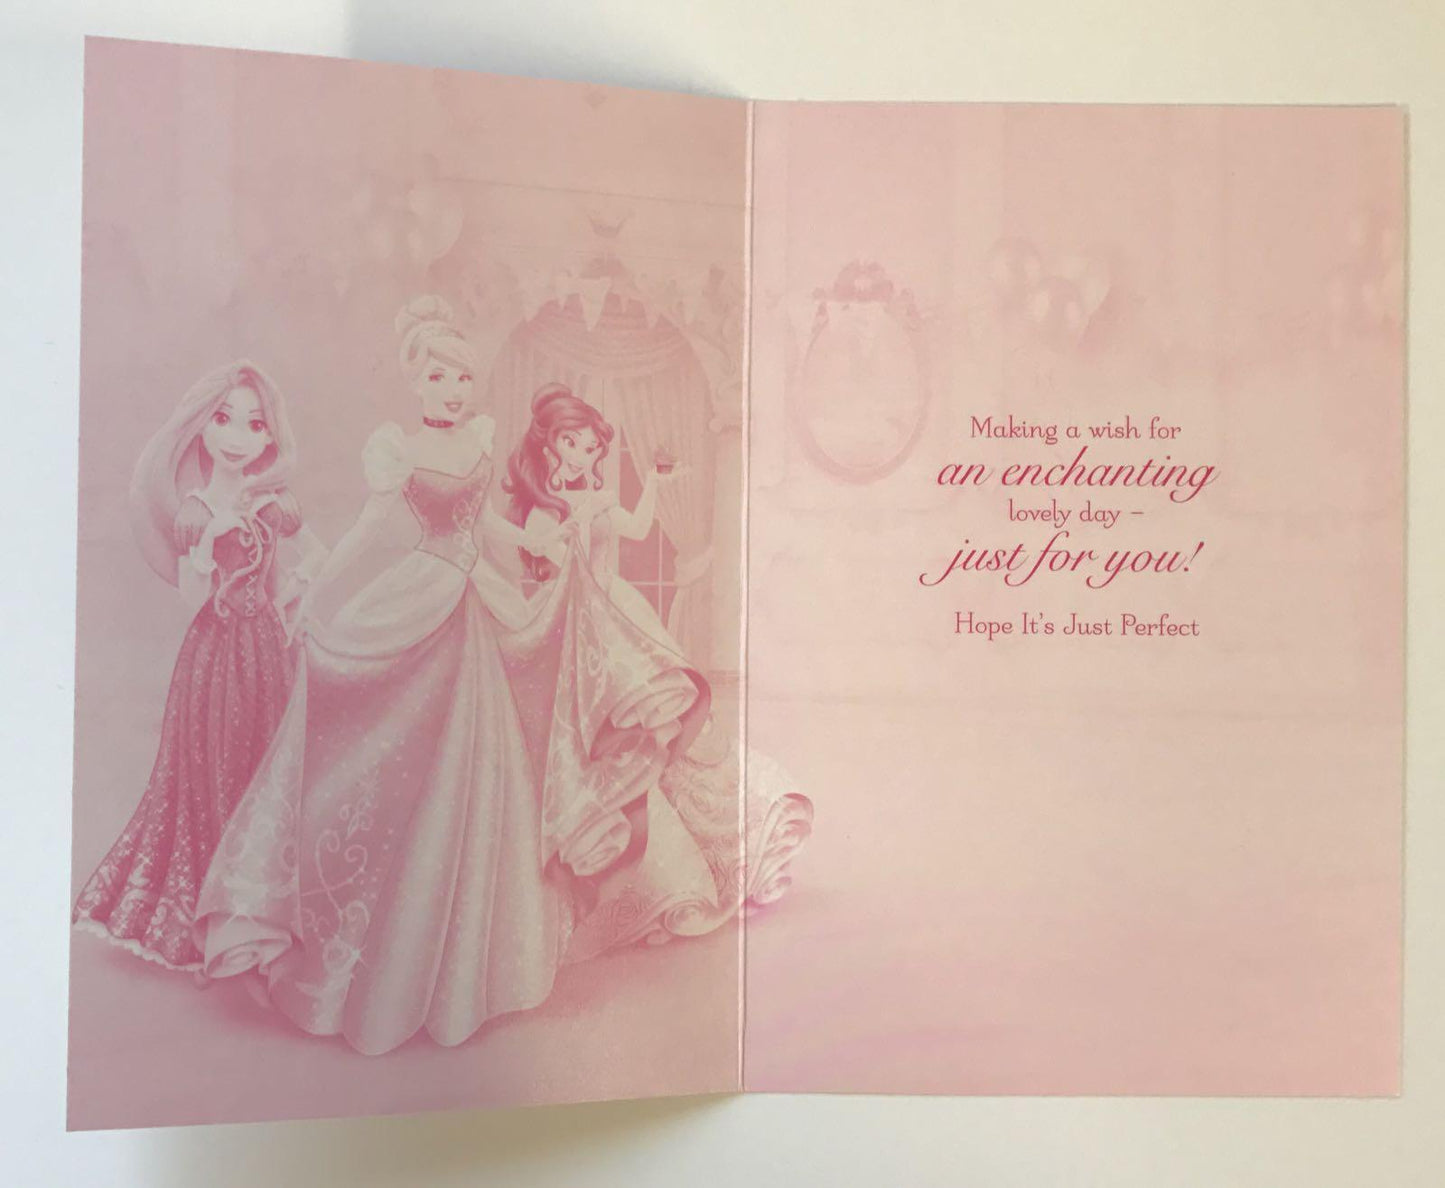 Disney Princesses Happy Birthday Card	